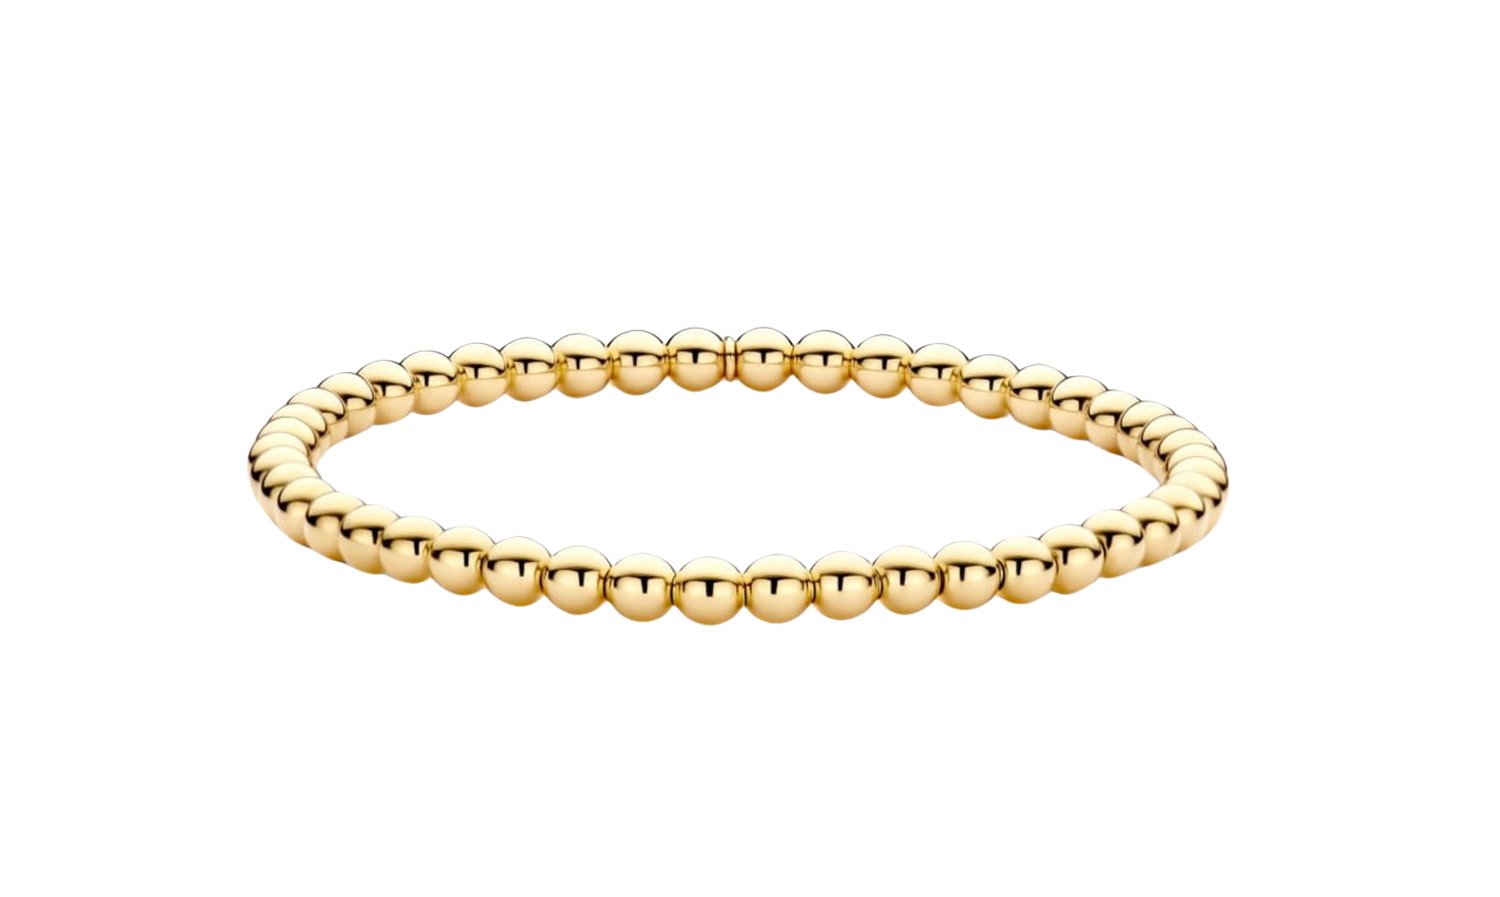 Hulchi Belluni "Tresore" Stretch Bracelet in 18kt Yellow Gold